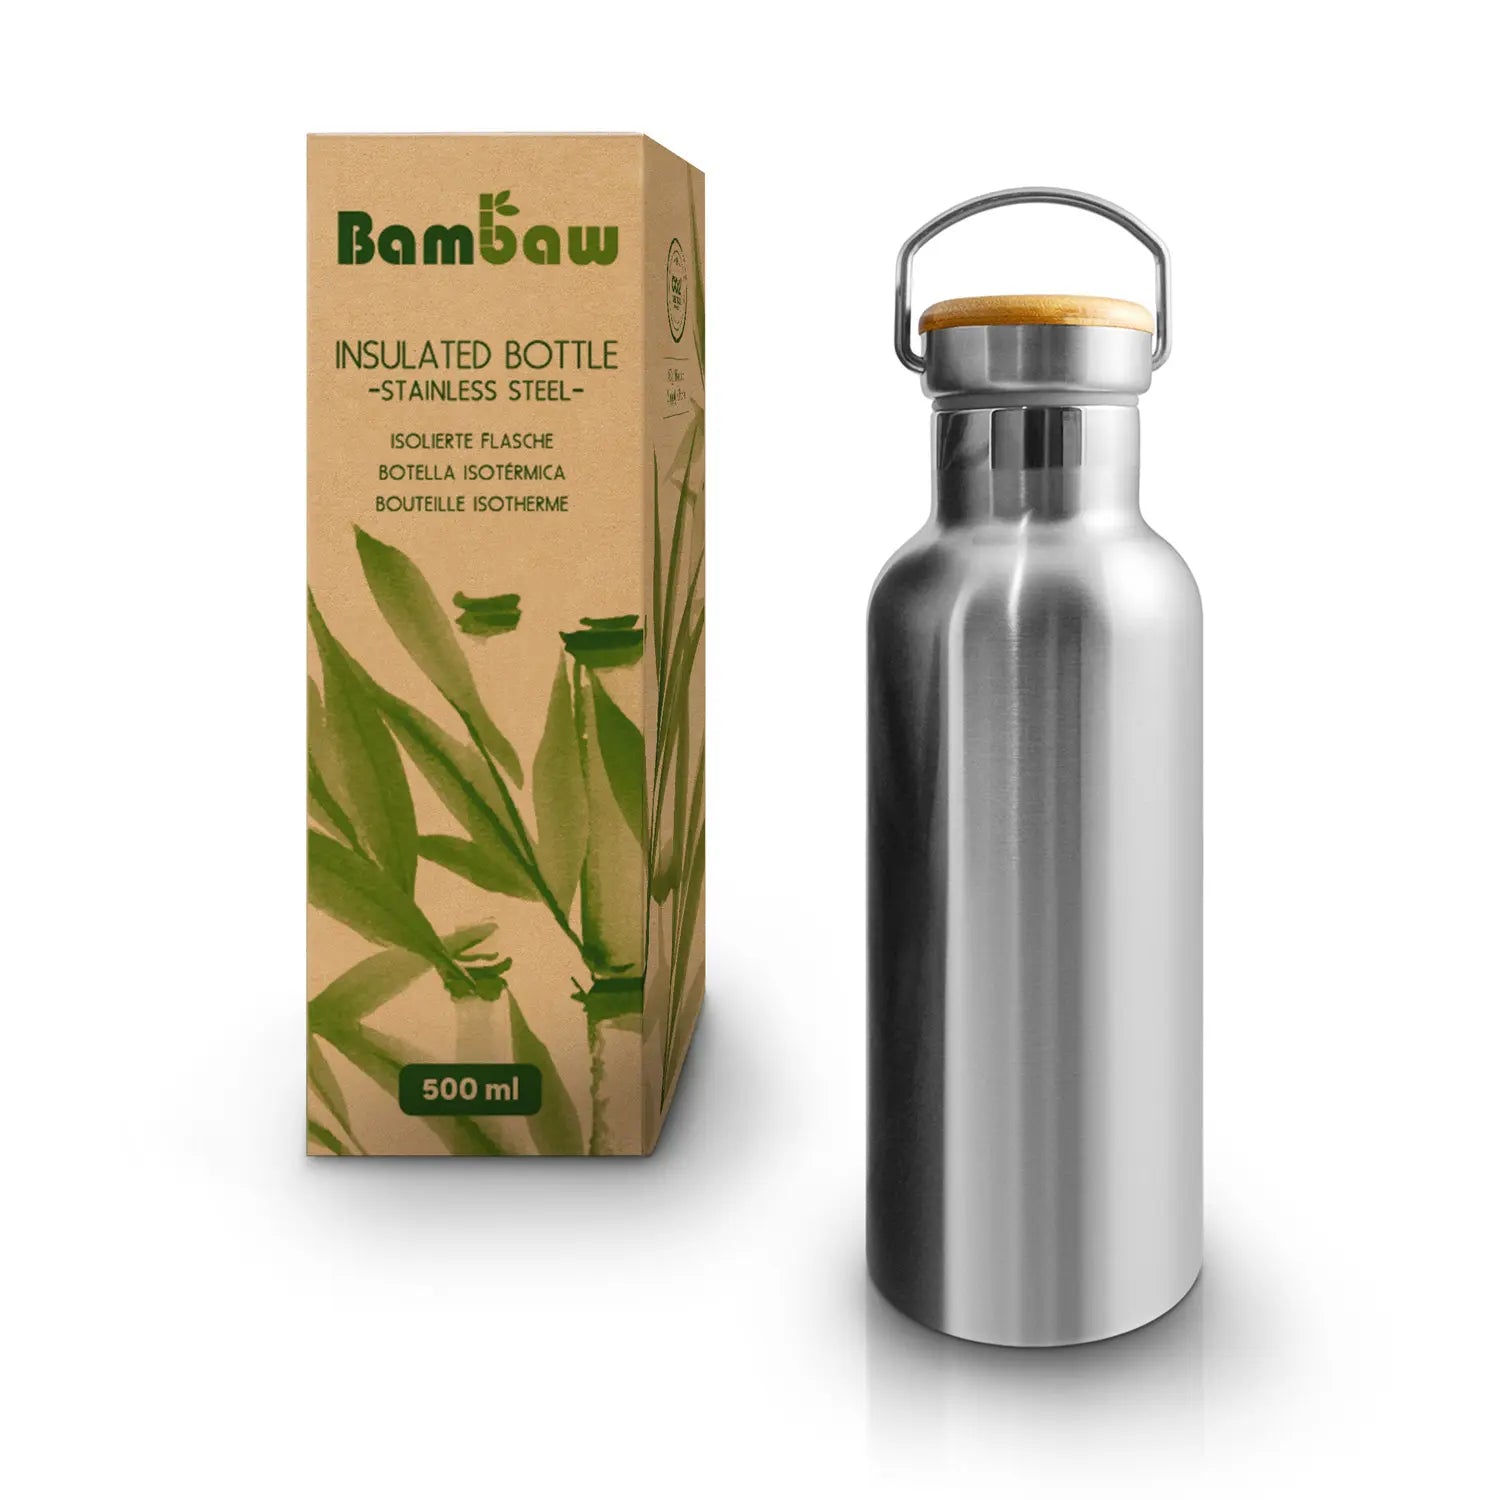 Bambaw rustfri stål drikkedunk med bæredygtig emballage